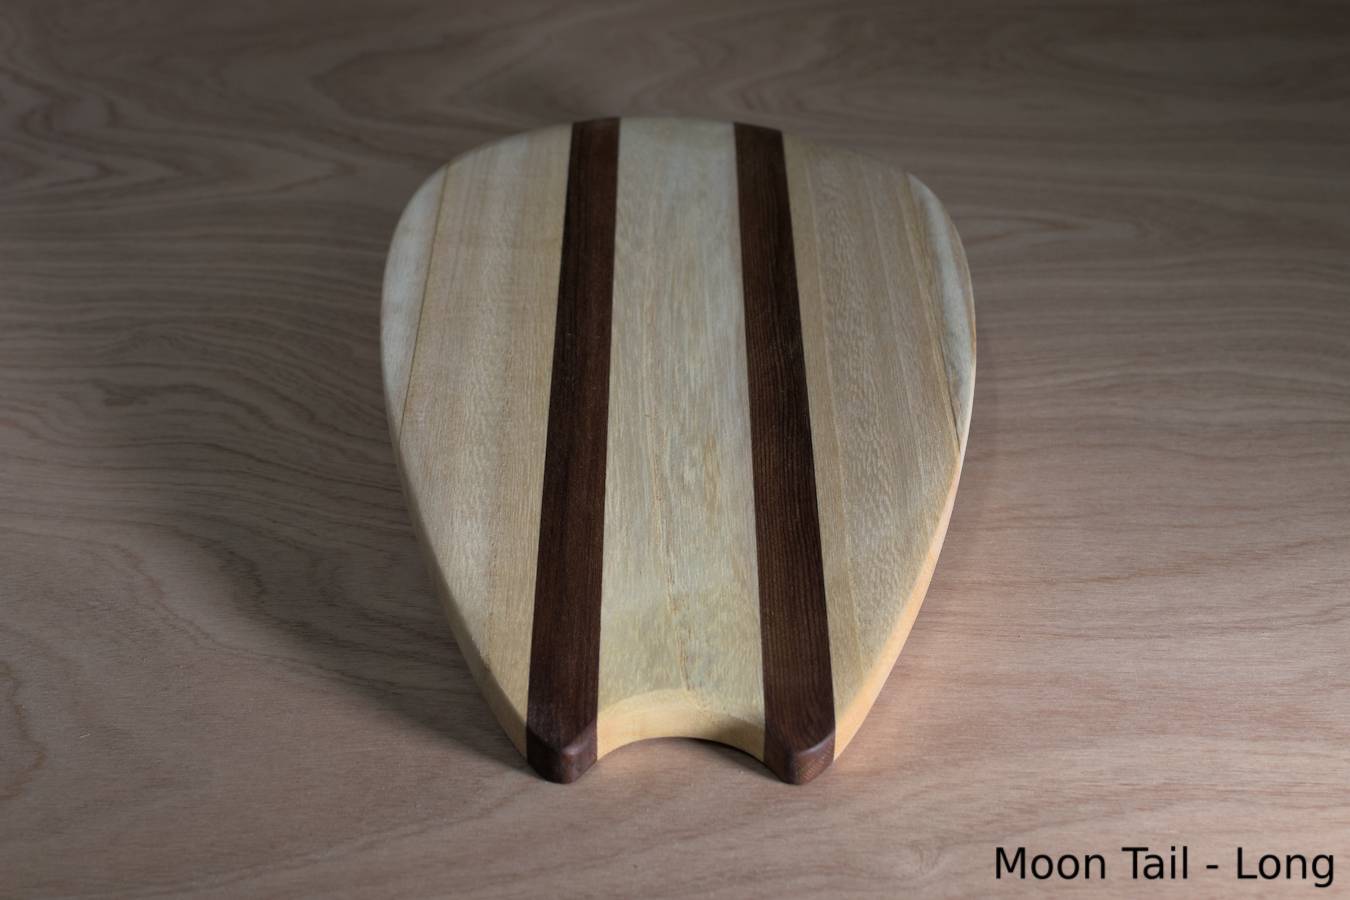 Moon Tail (long) wooden handplane handmade by Fyne Boat Kits